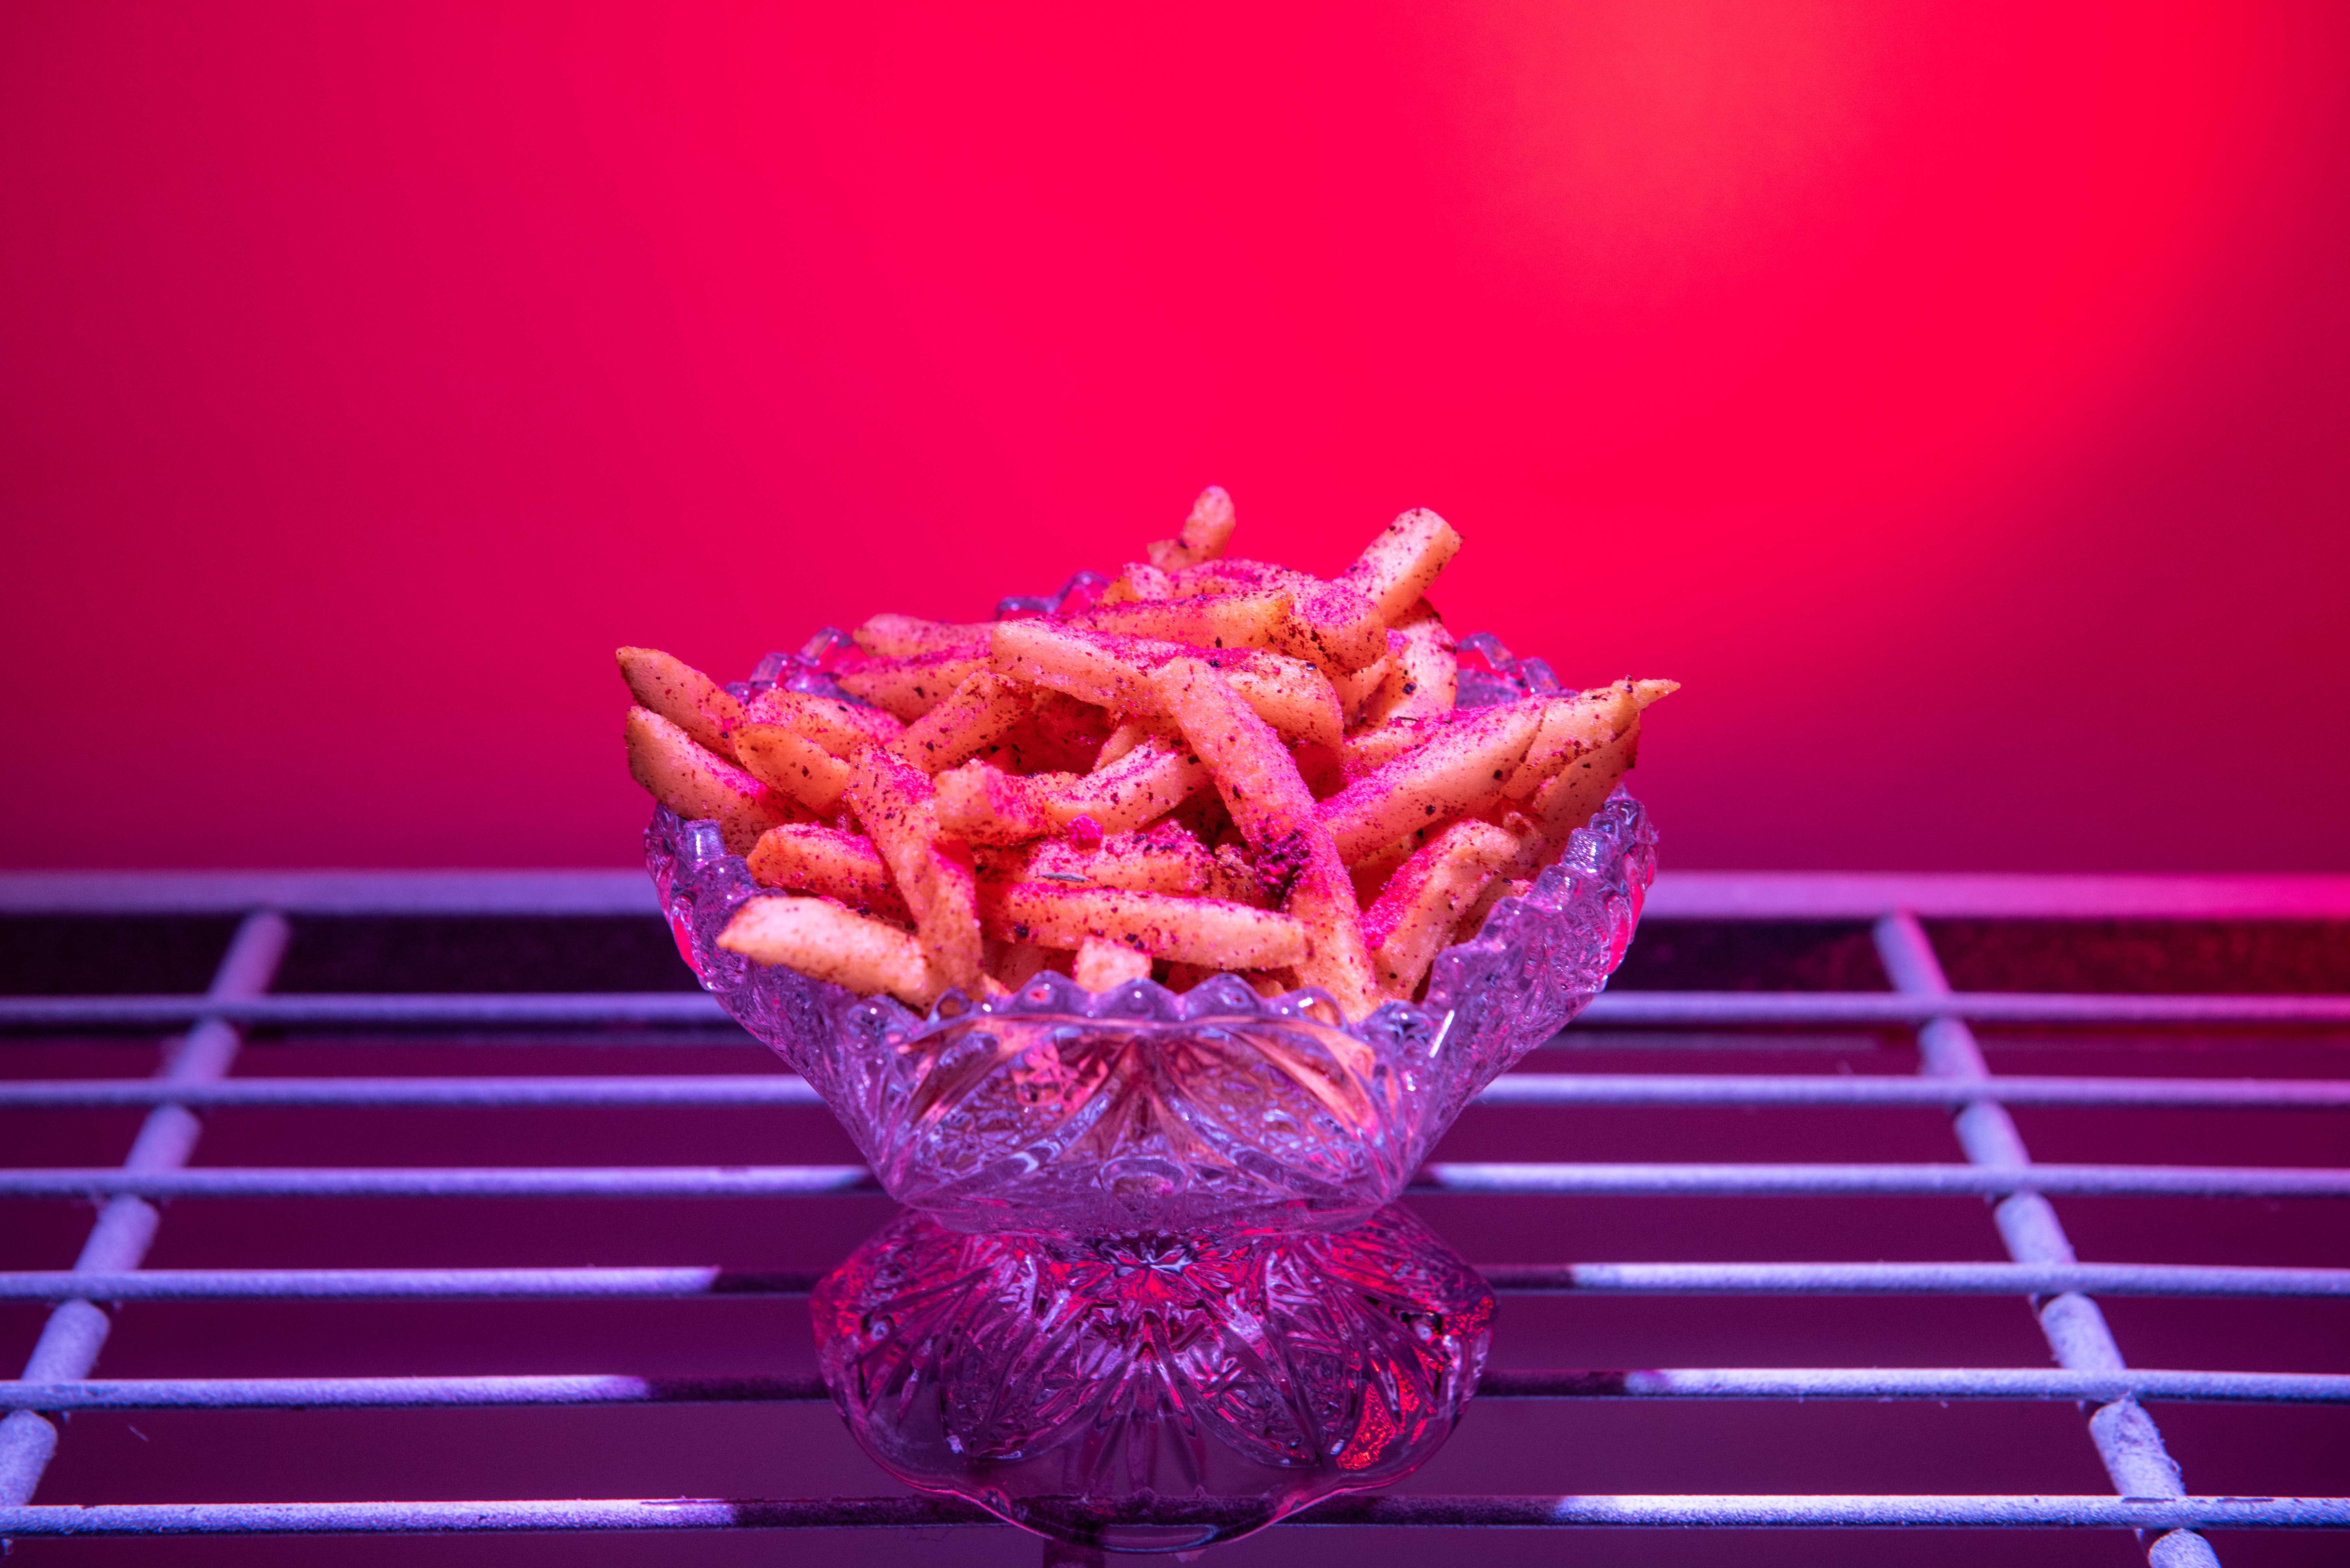 Shoestring fries with chilli salt ($12) by Stevie Hatz